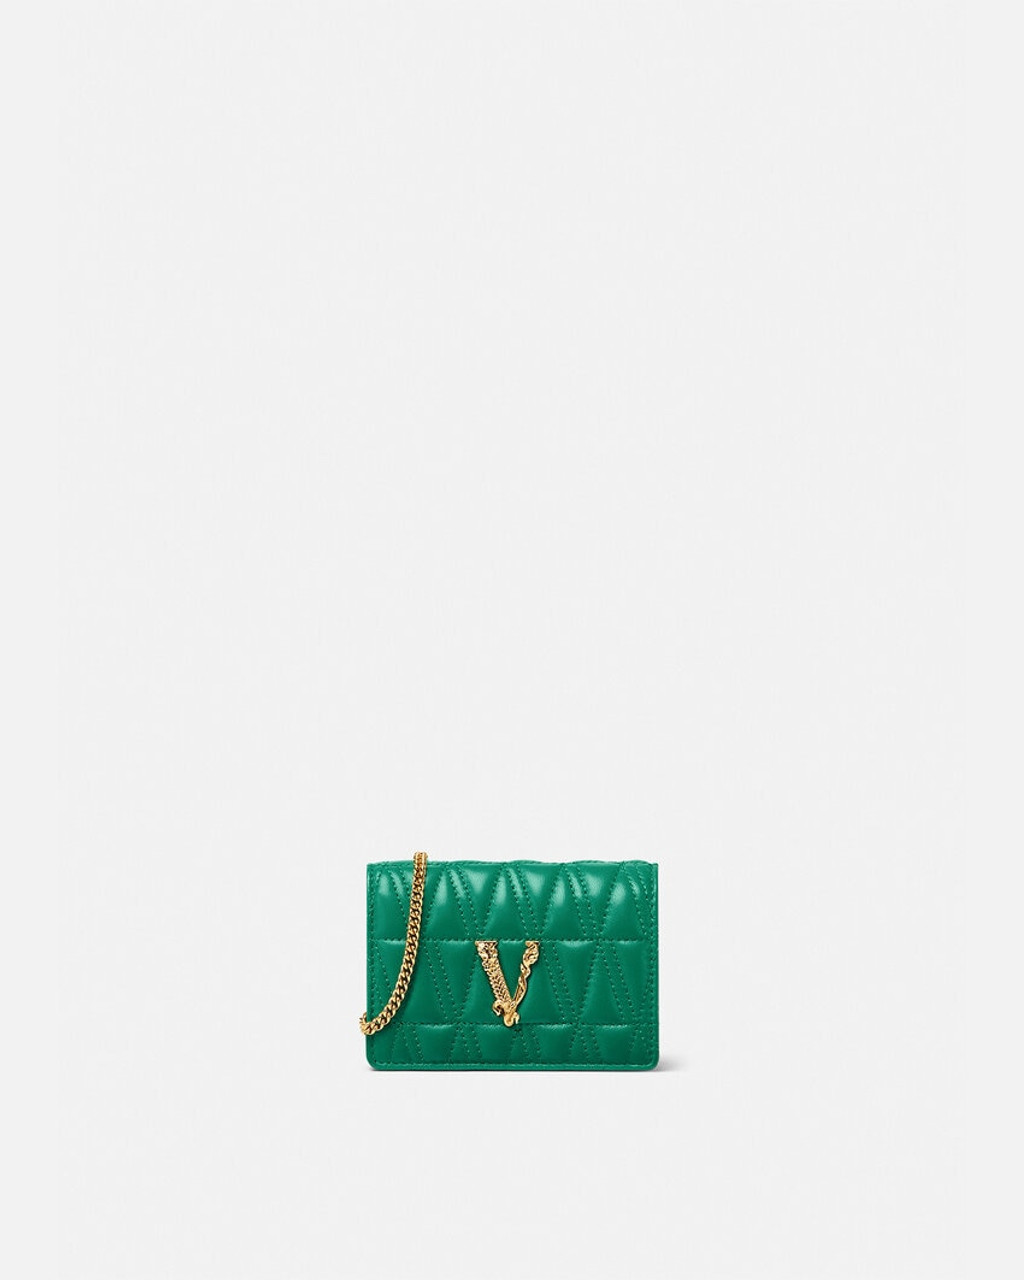 5 bags : - RENOUARD orange leather bag, with bow ; - gre… | MoniteurLive.com